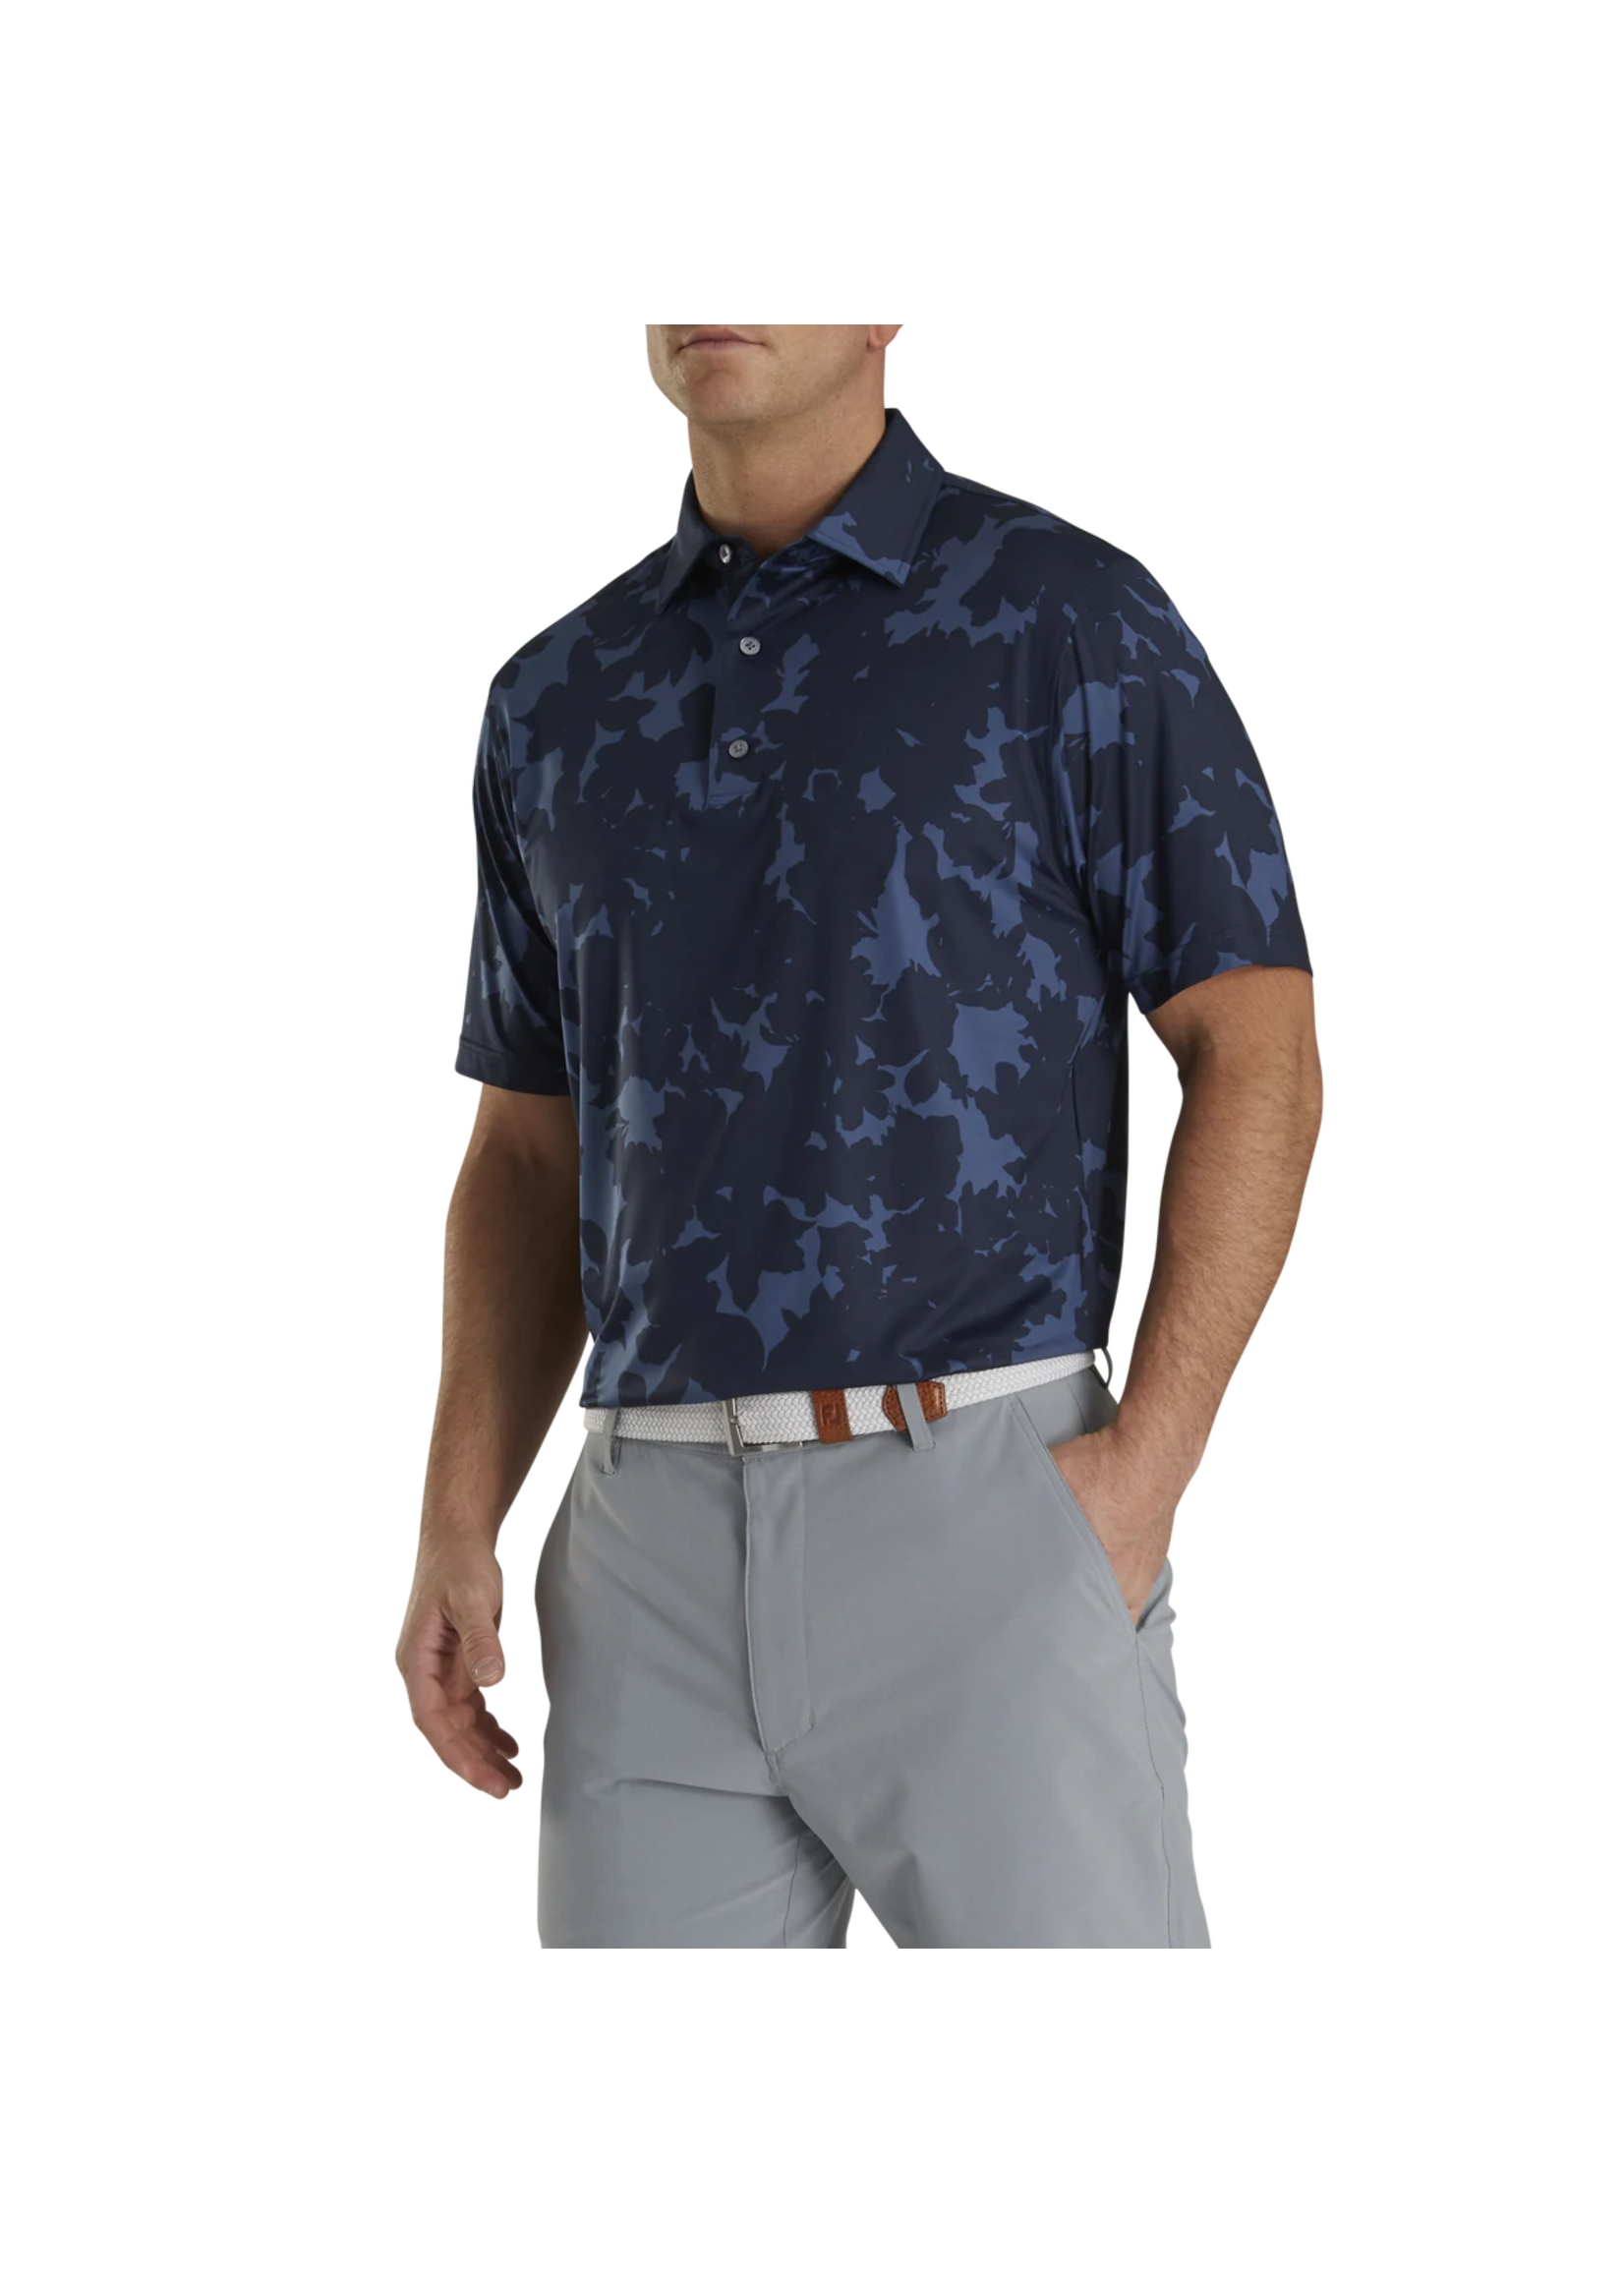 FJ Golf Shirt Floral